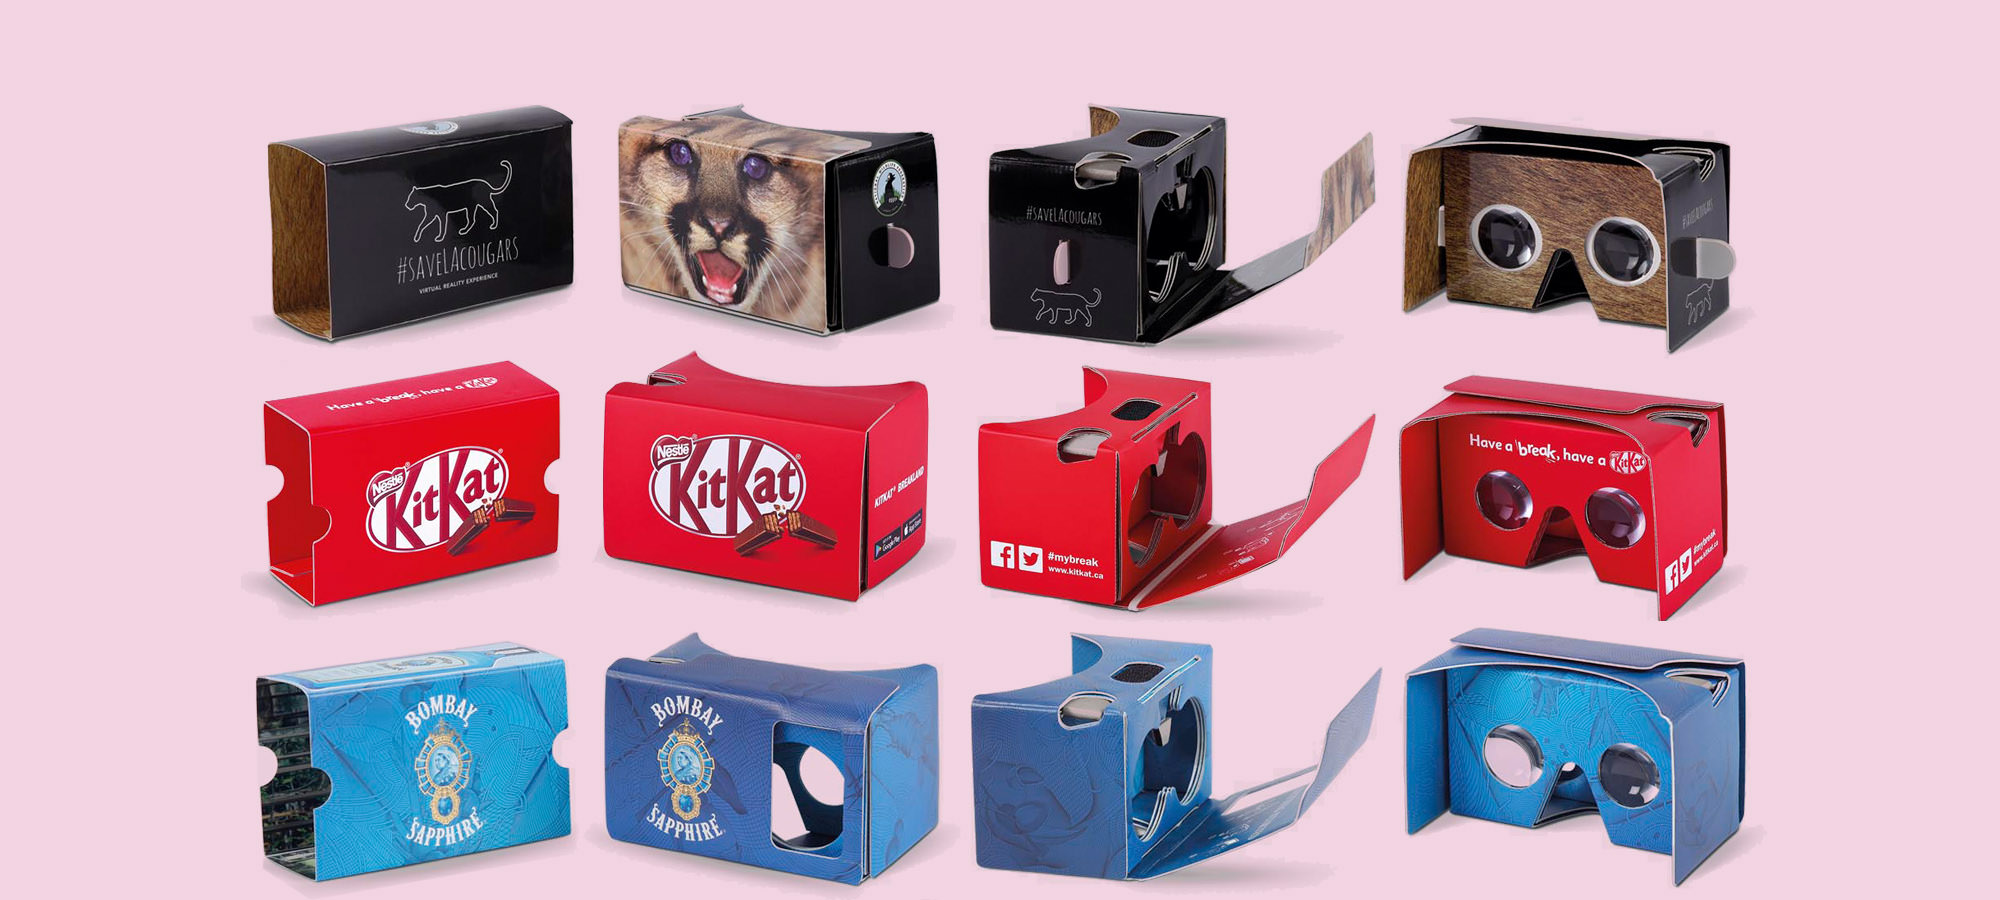 Branded Google Cardboard VR Headset -